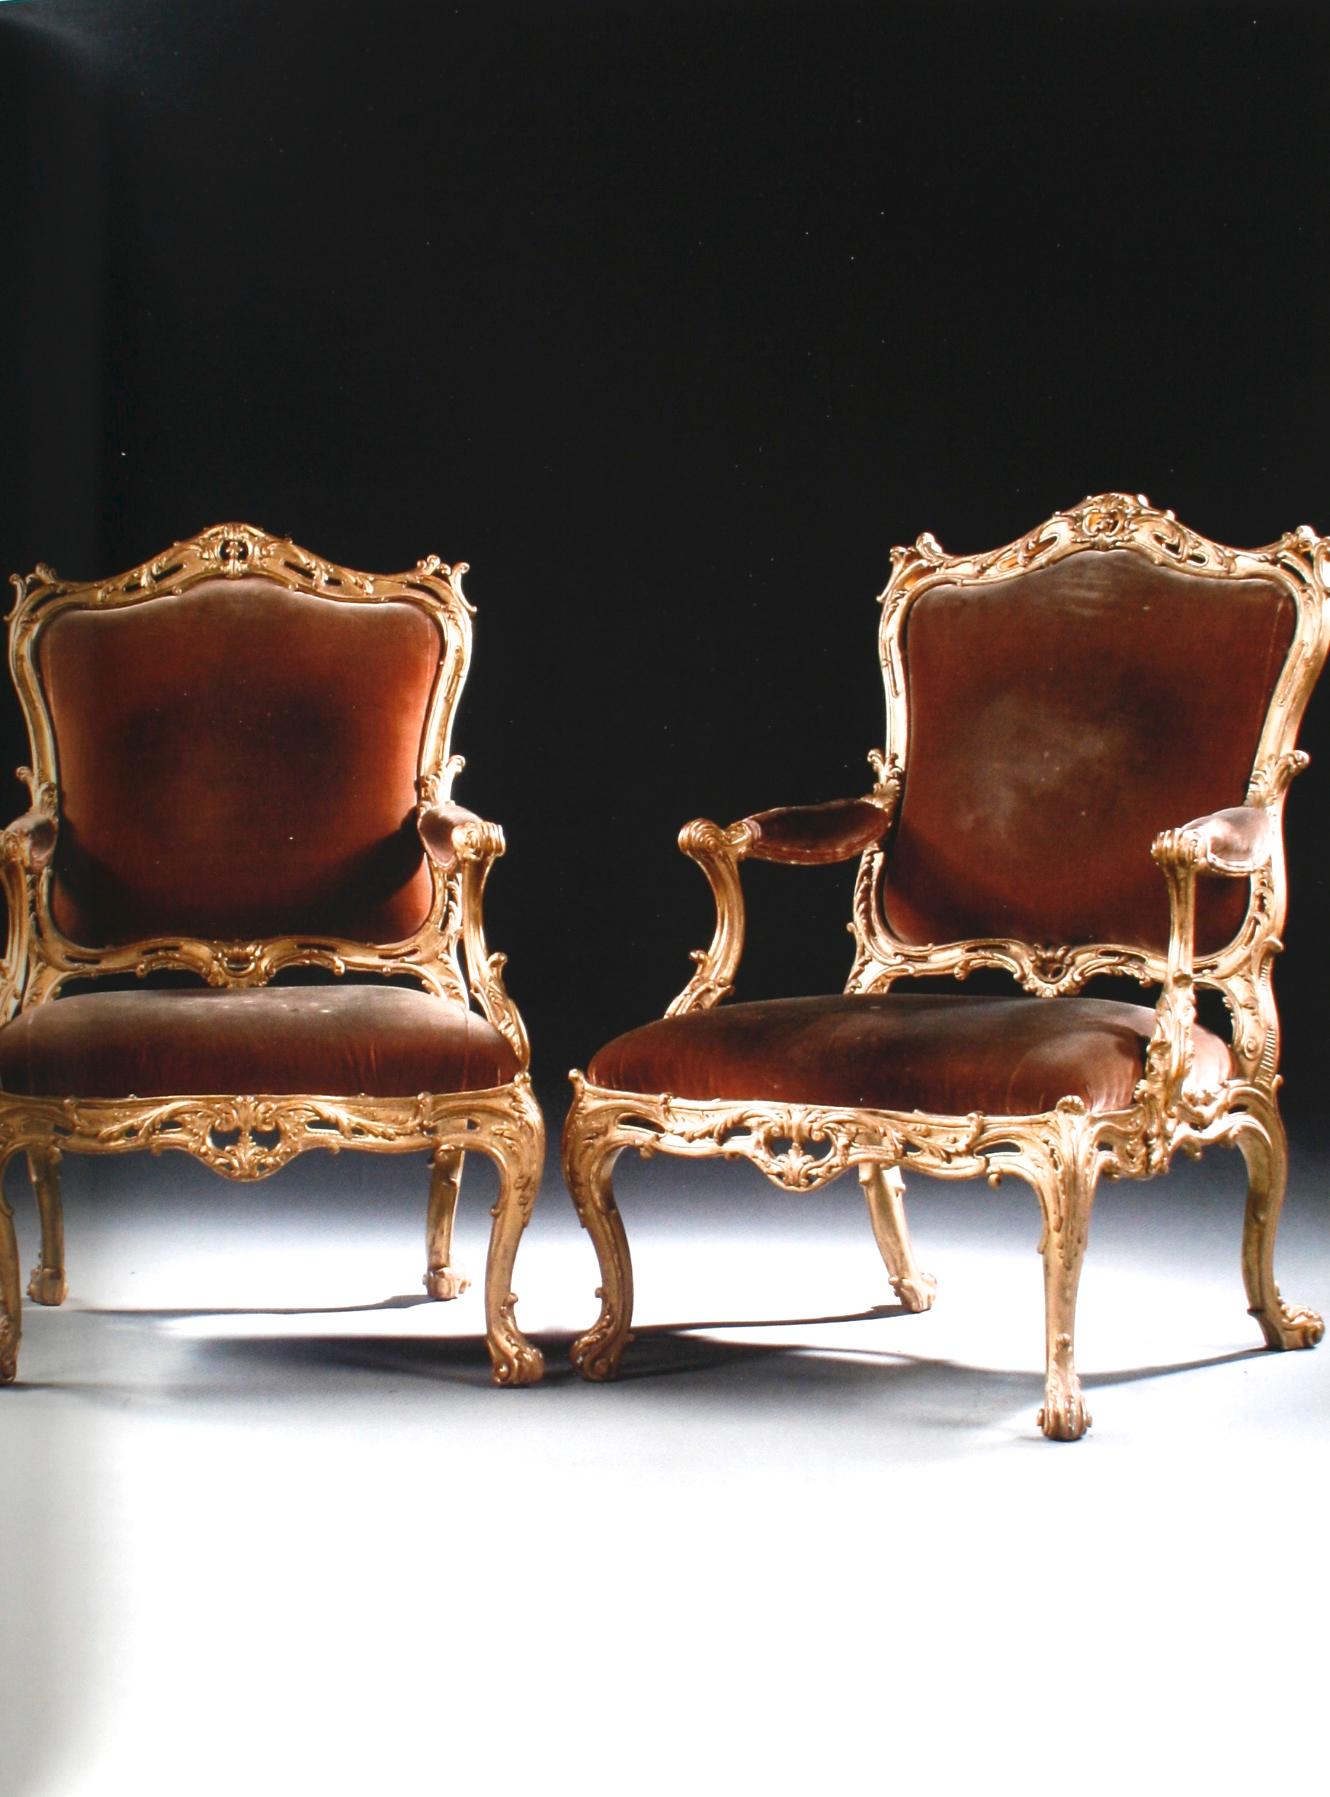 Christies: Important English Furniture: Reed House, David Adler & Frances Elkin 11